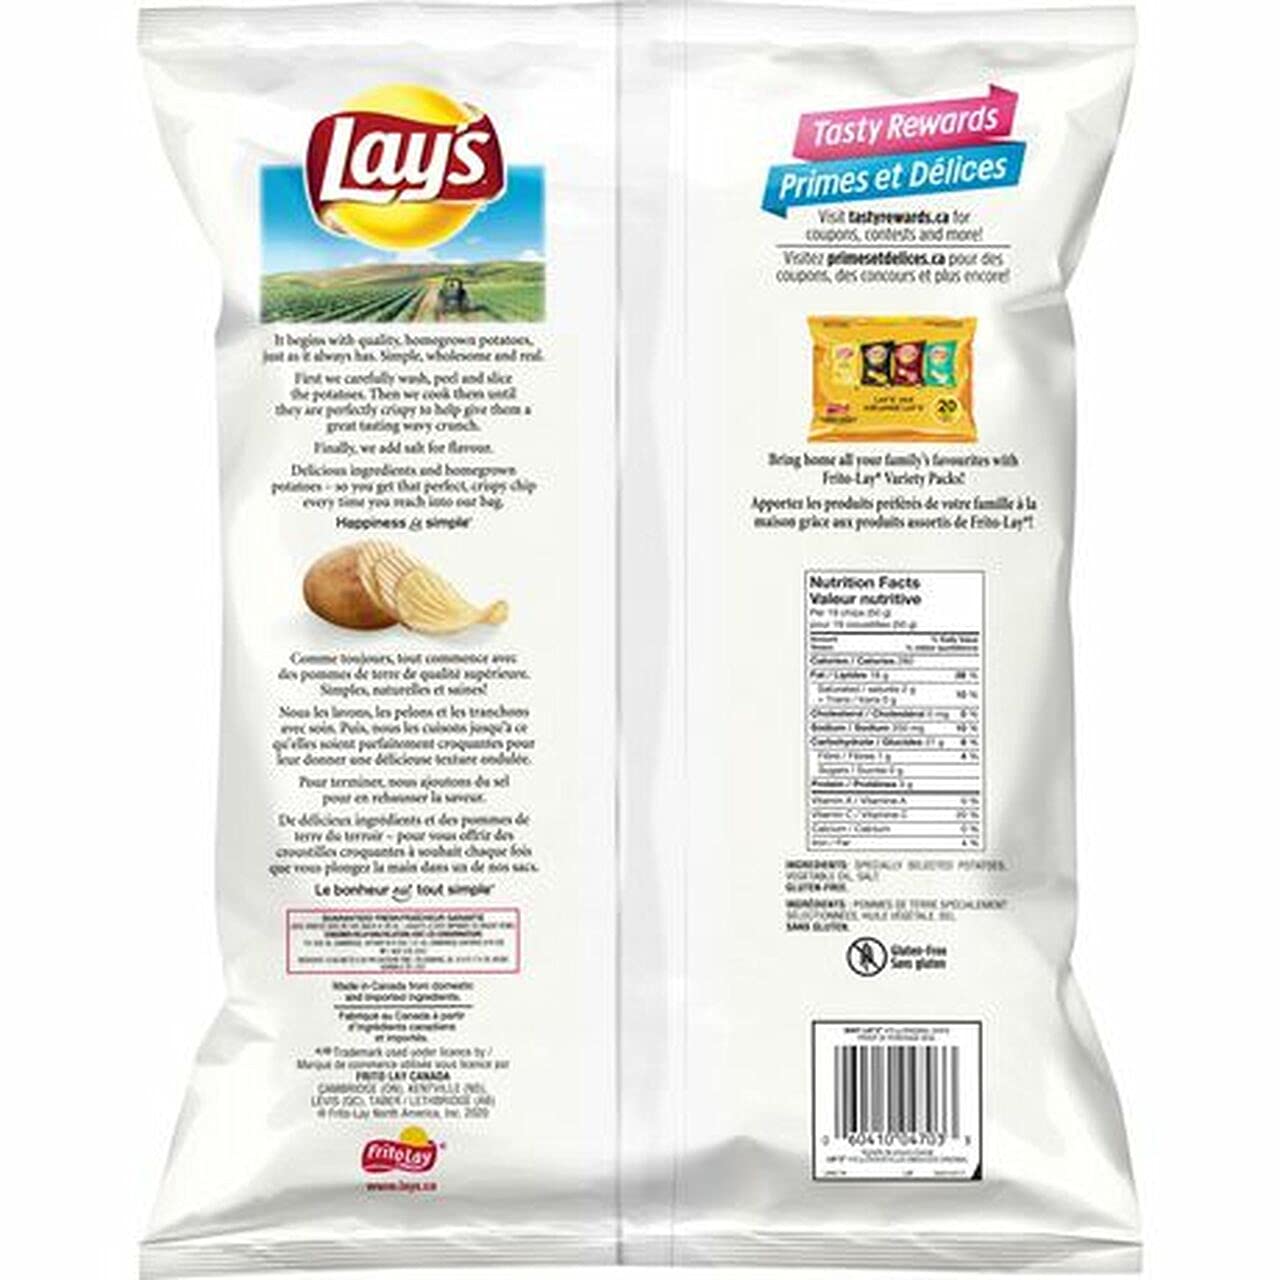 Lay's Wavy Original Potato Chips Back